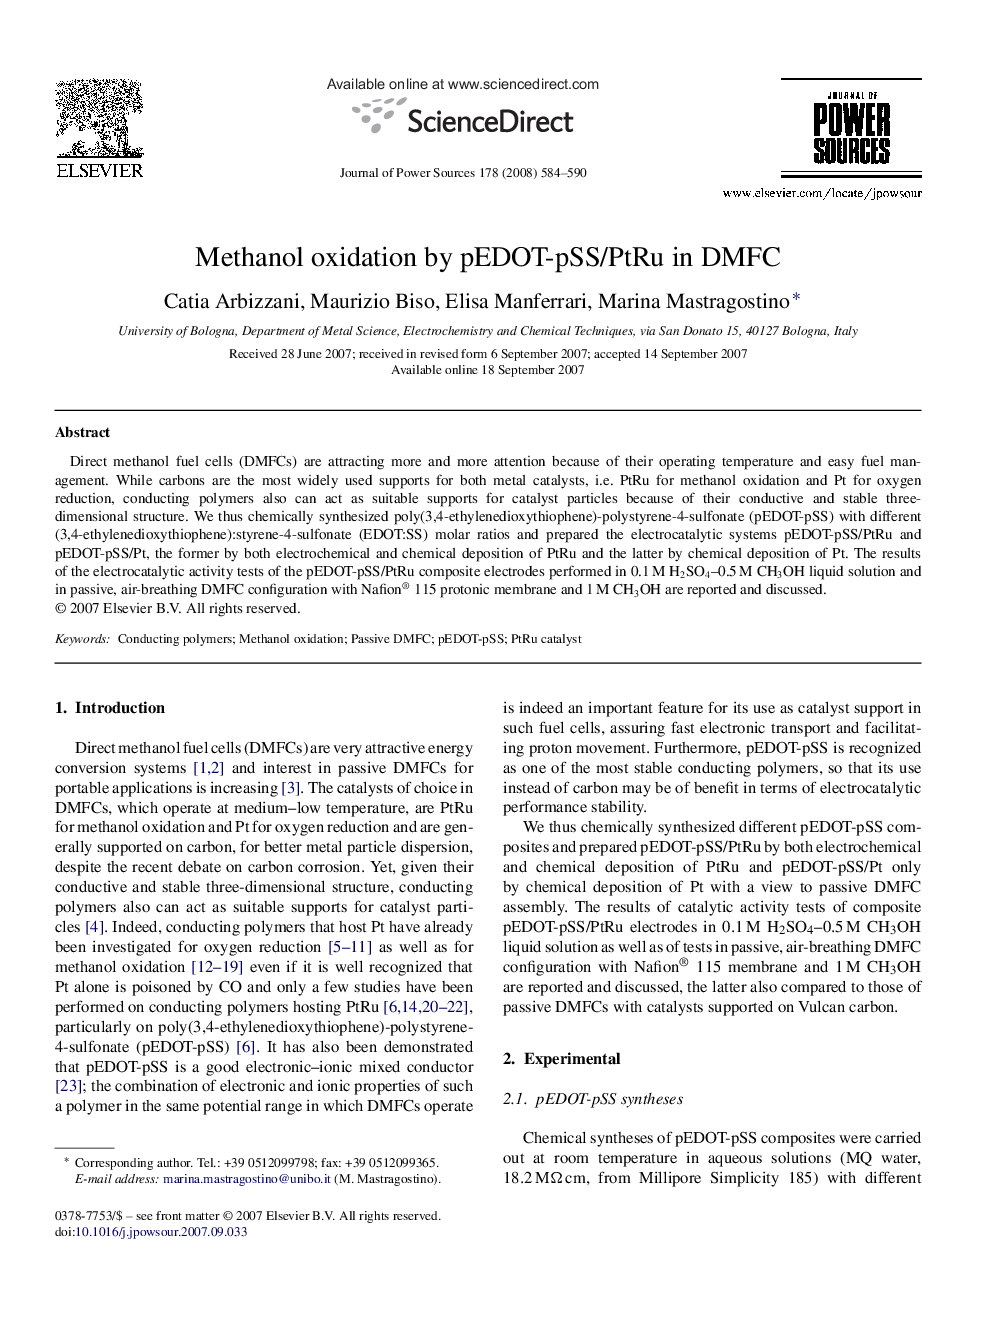 Methanol oxidation by pEDOT-pSS/PtRu in DMFC